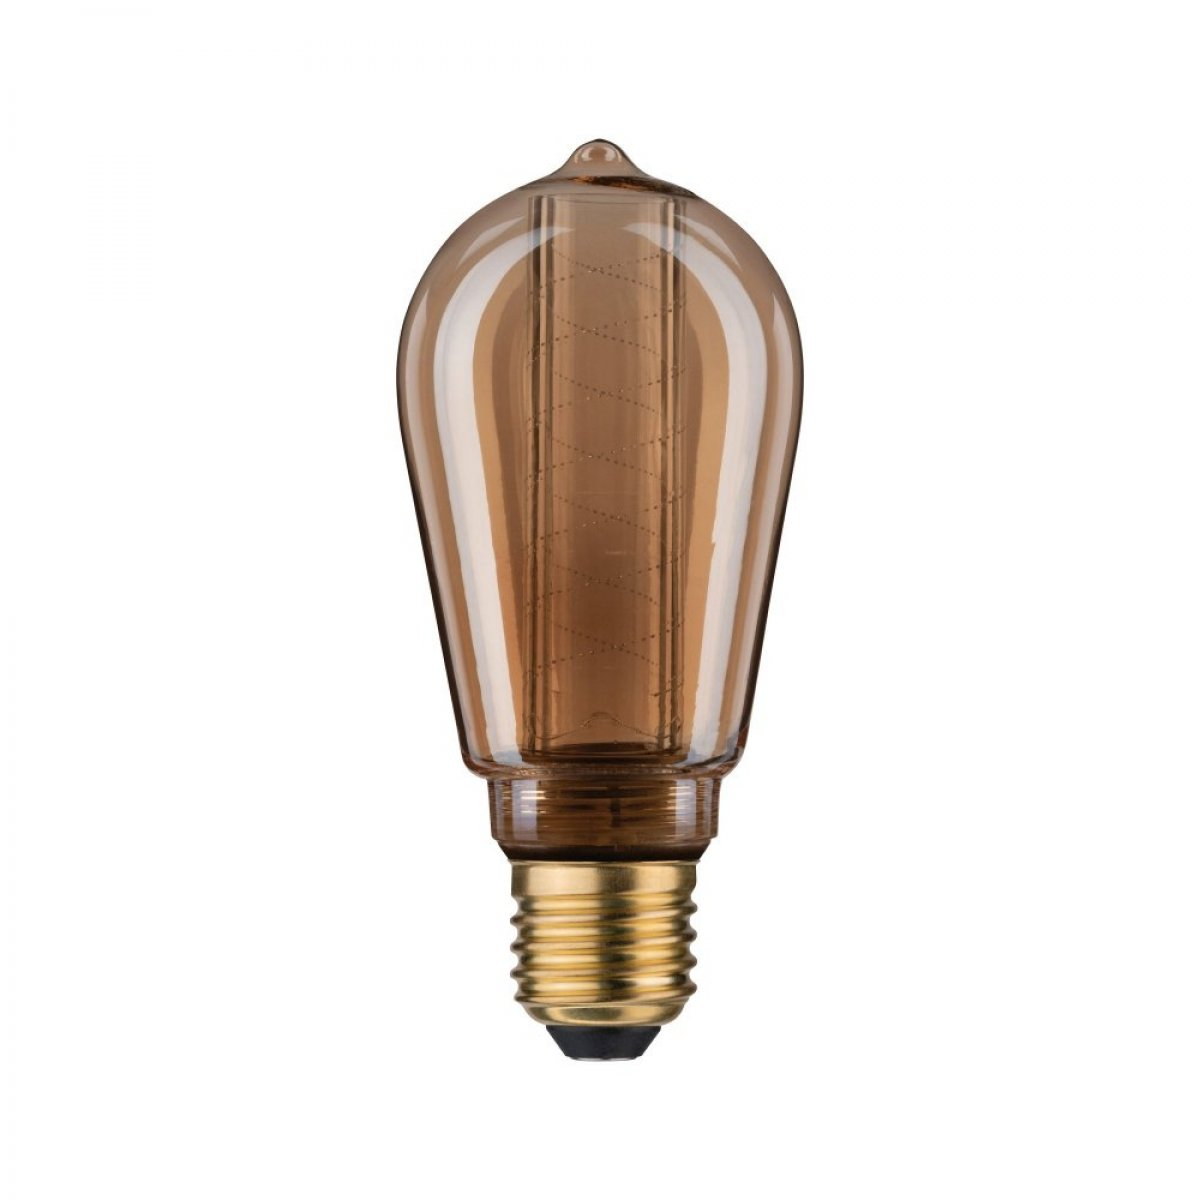 LICHT 120 Watt LED 3,6 lm PAULMANN E27 InnerGlow Leuchtmittel Goldlicht